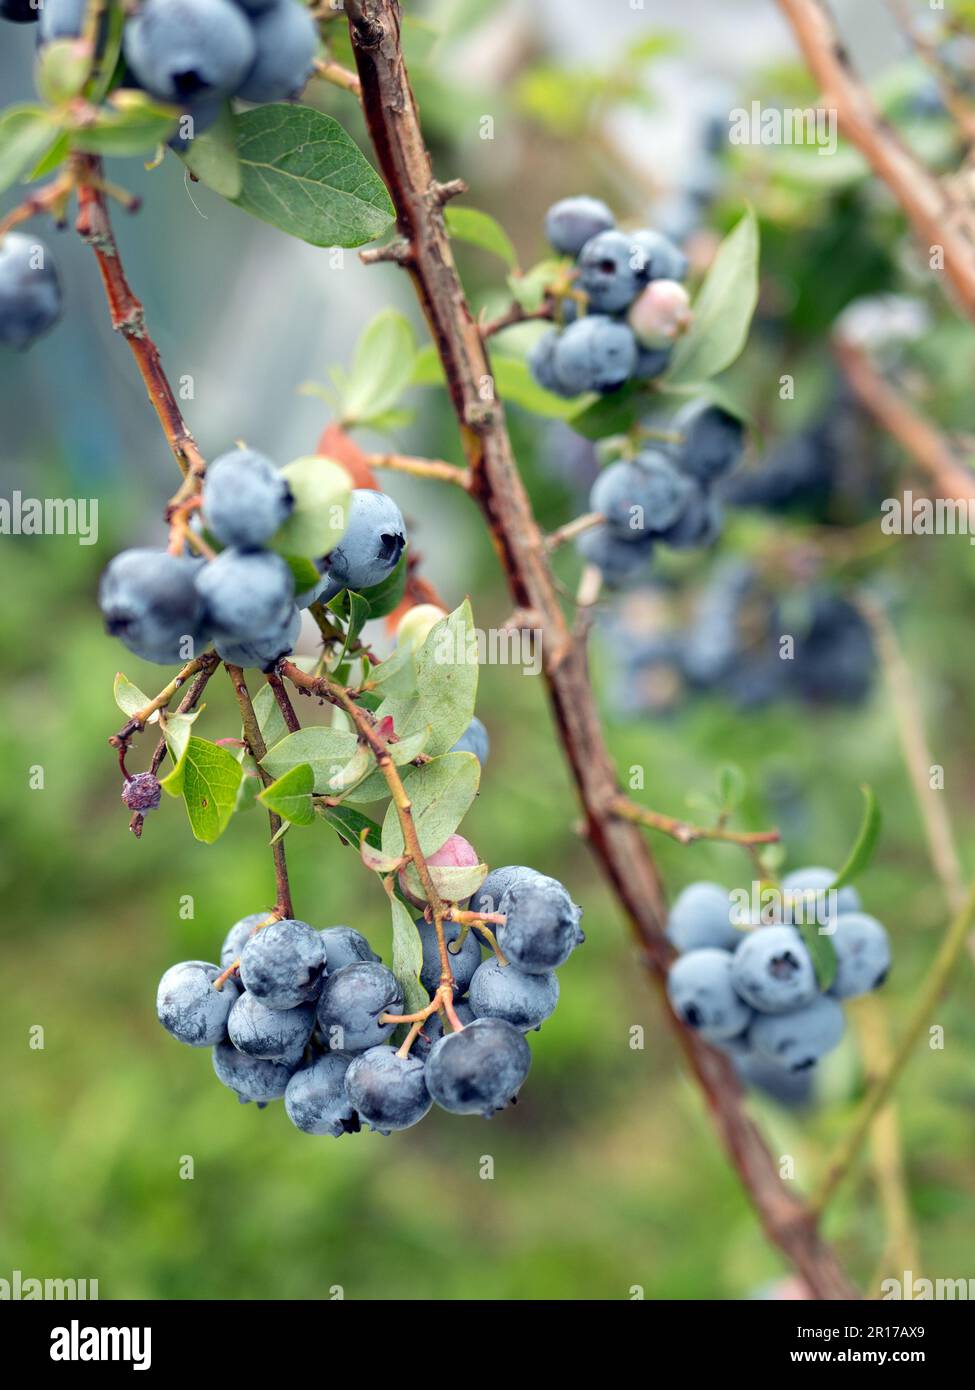 Reife Beeren im Blaubeerbusch, selektiver Fokus. Fruchtklumpen, Nahaufnahme. Reichhaltige Beerenernte, vertikales Format Stockfoto